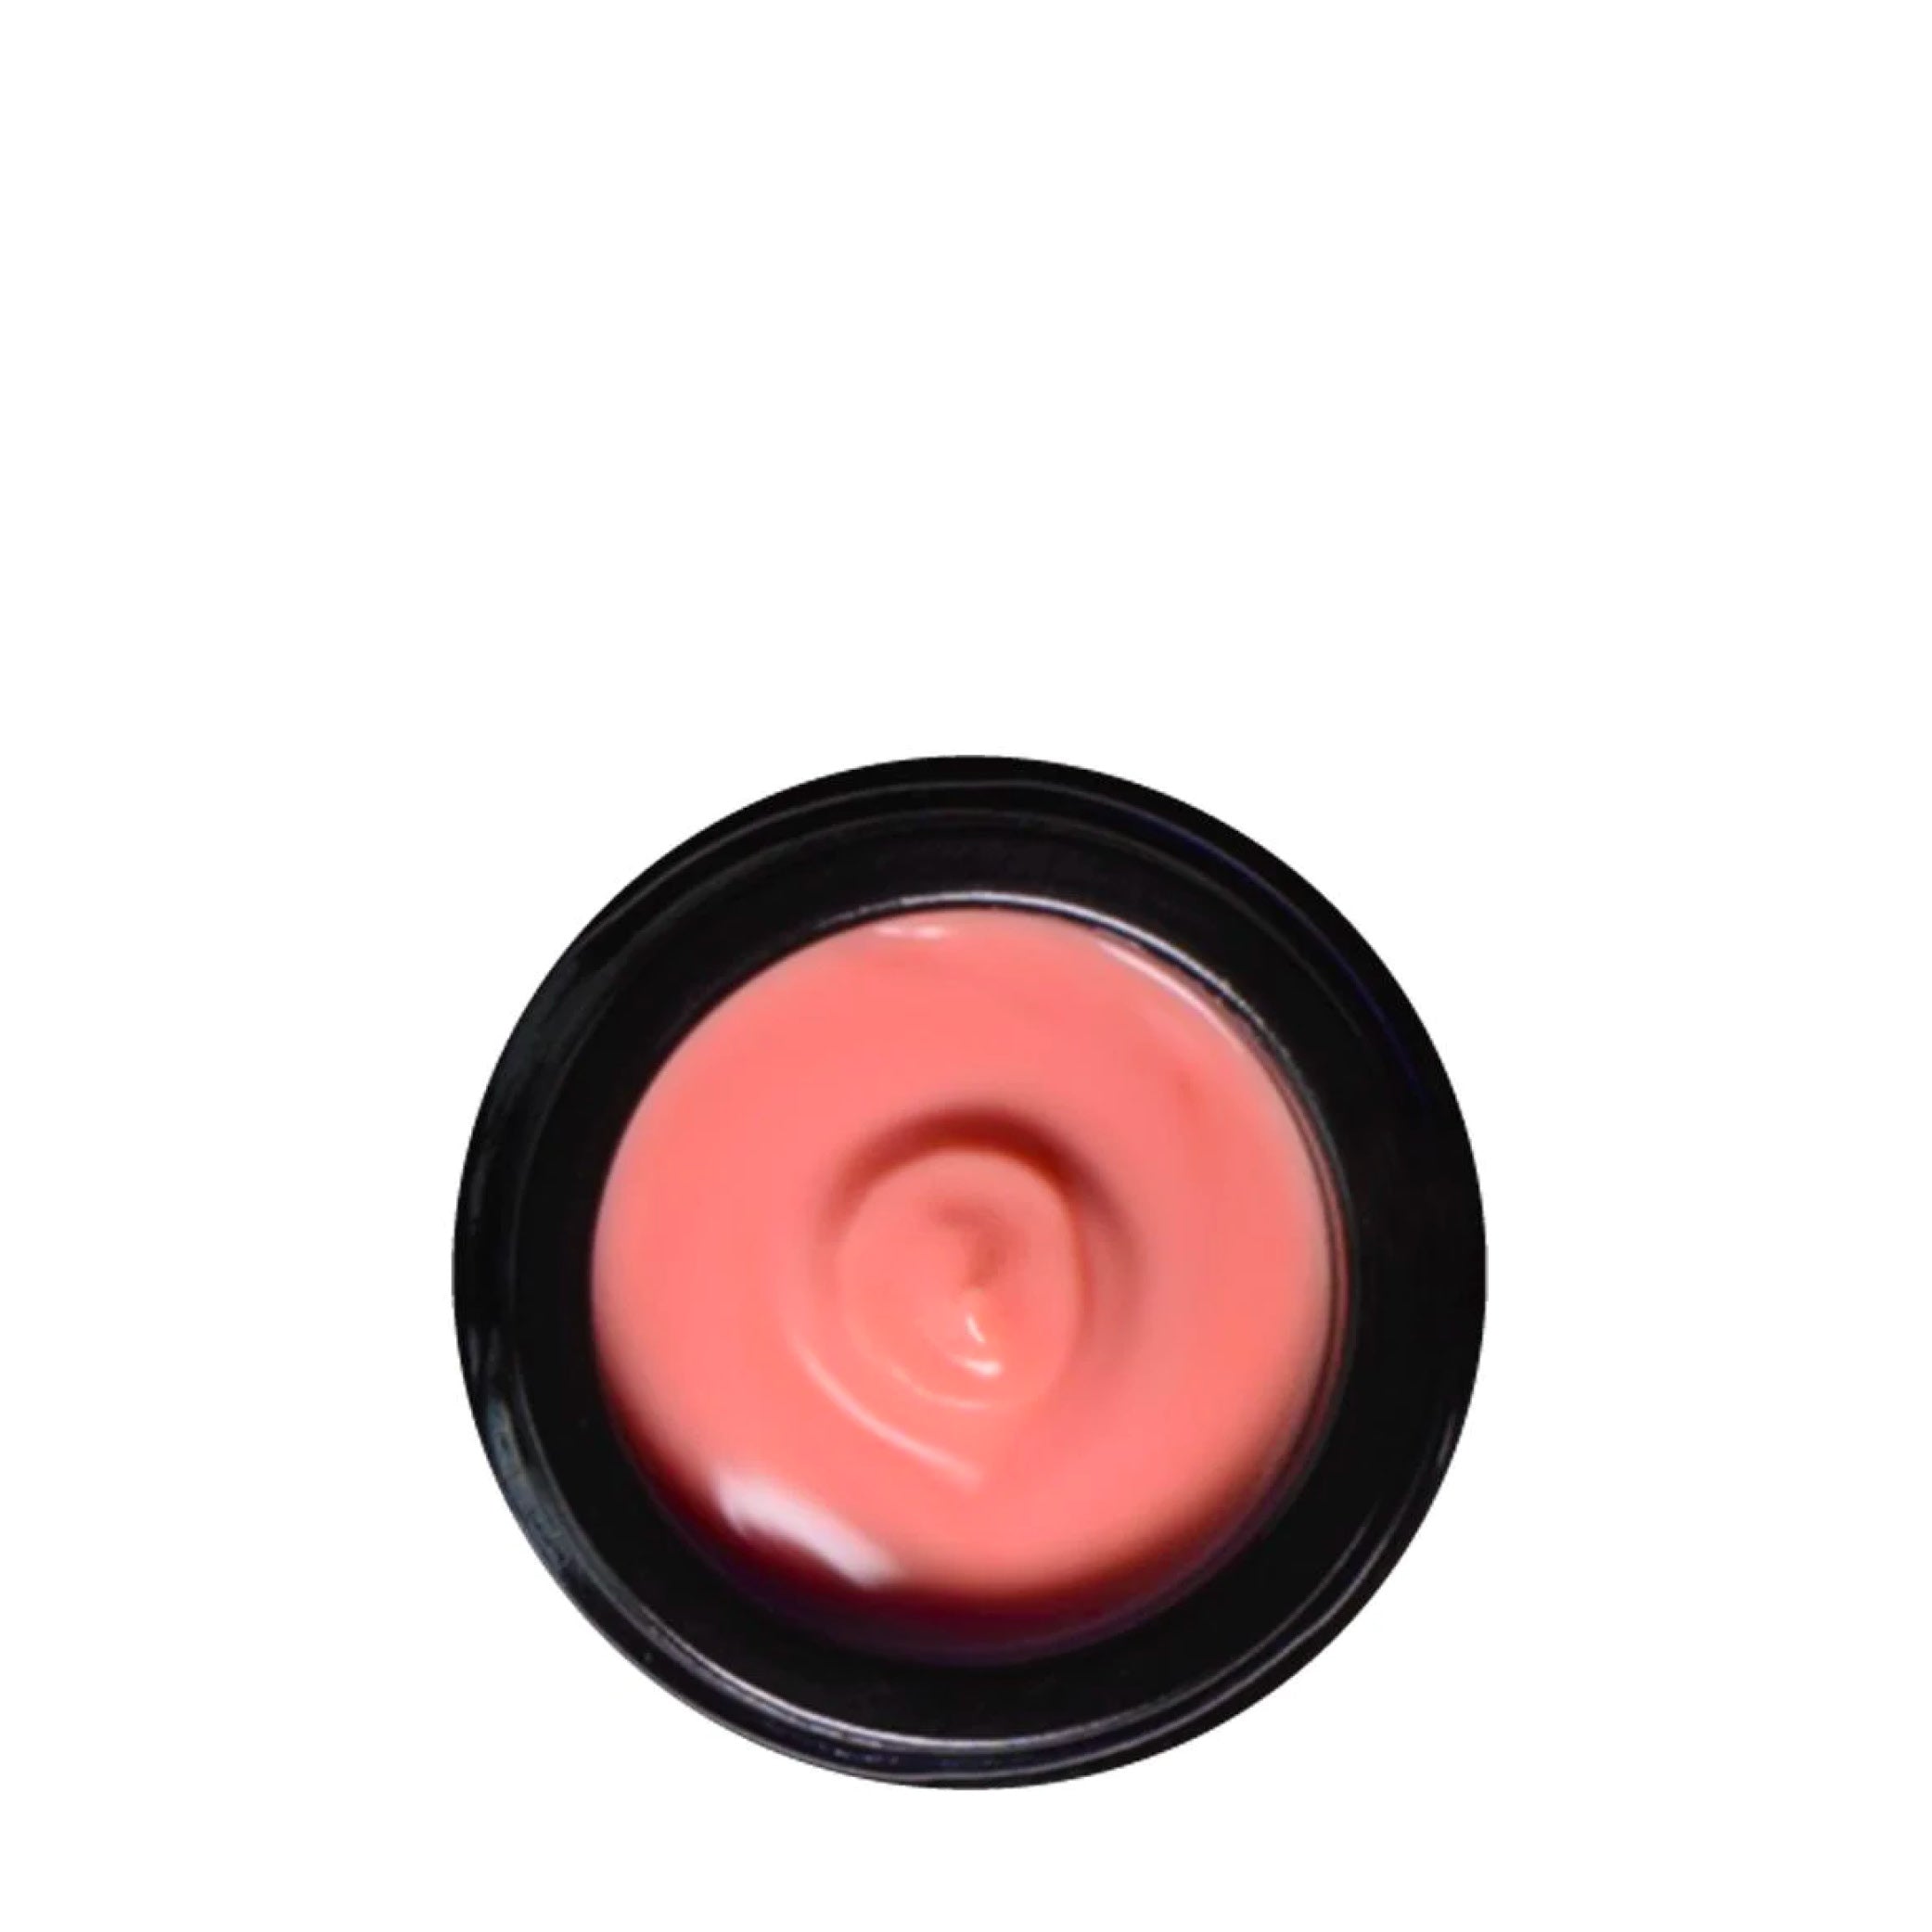 Rose Glow Crème